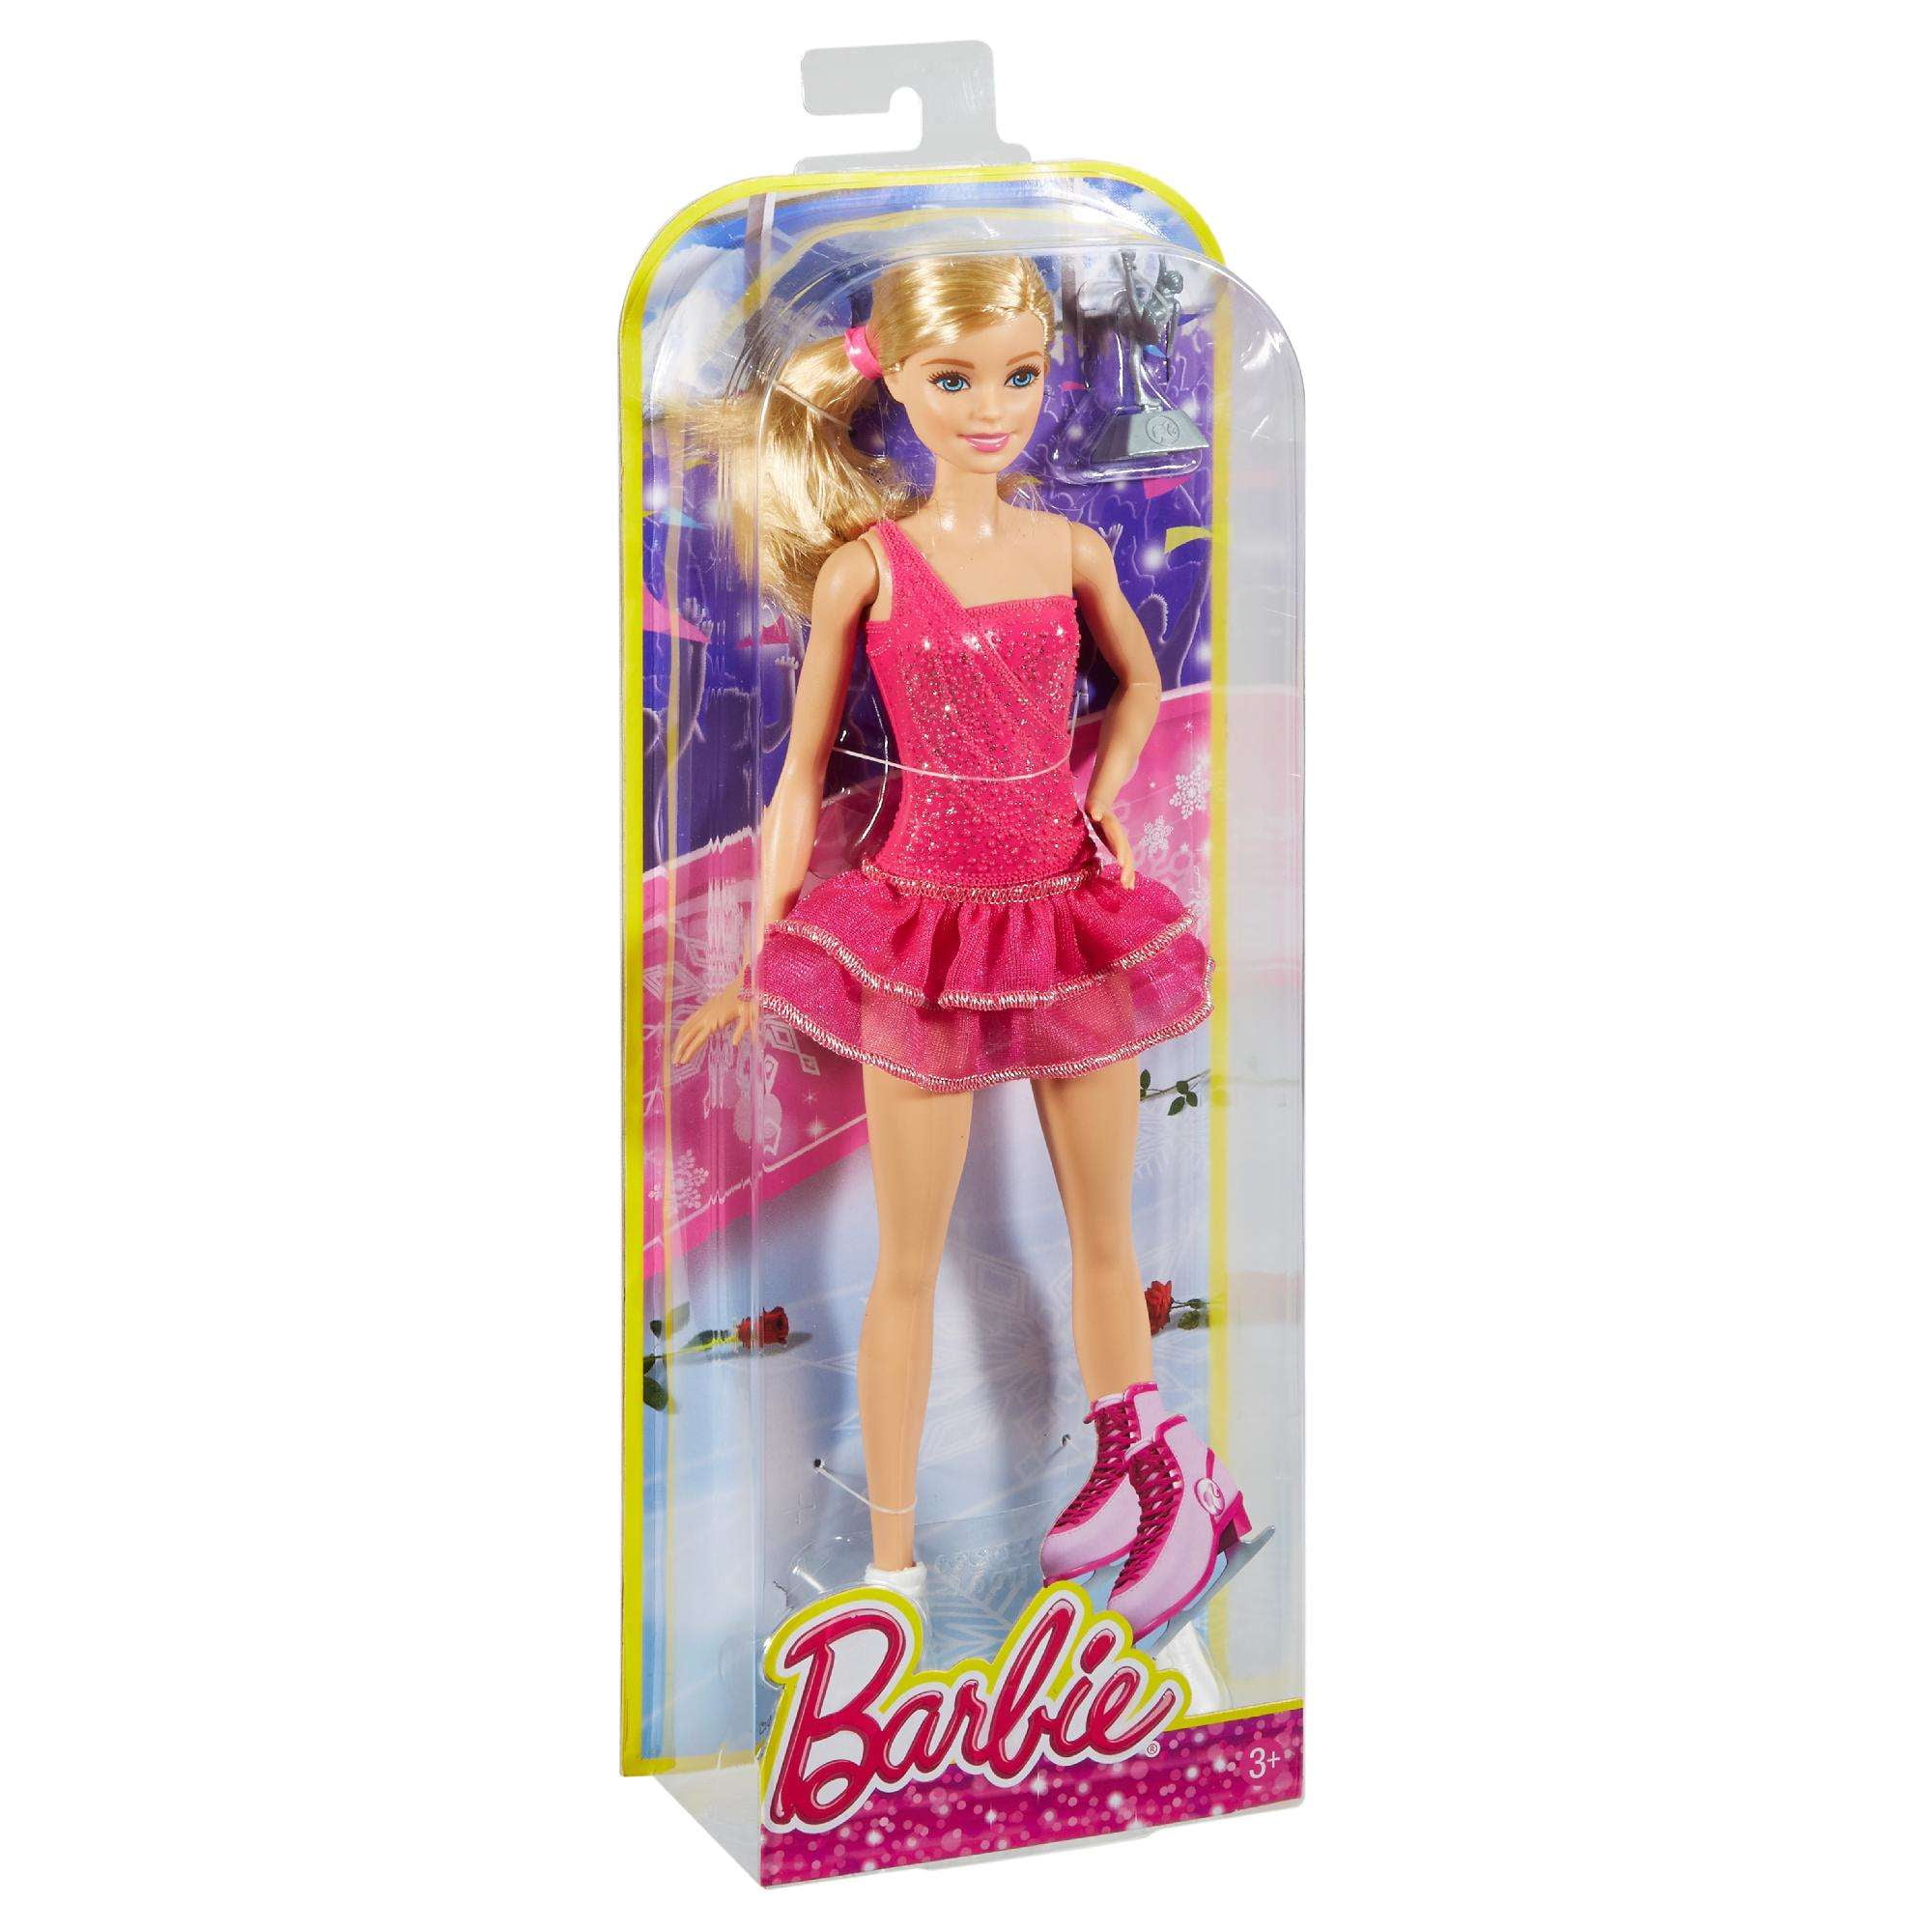 Barbie Careers Ice Skater Doll - Walmart.com